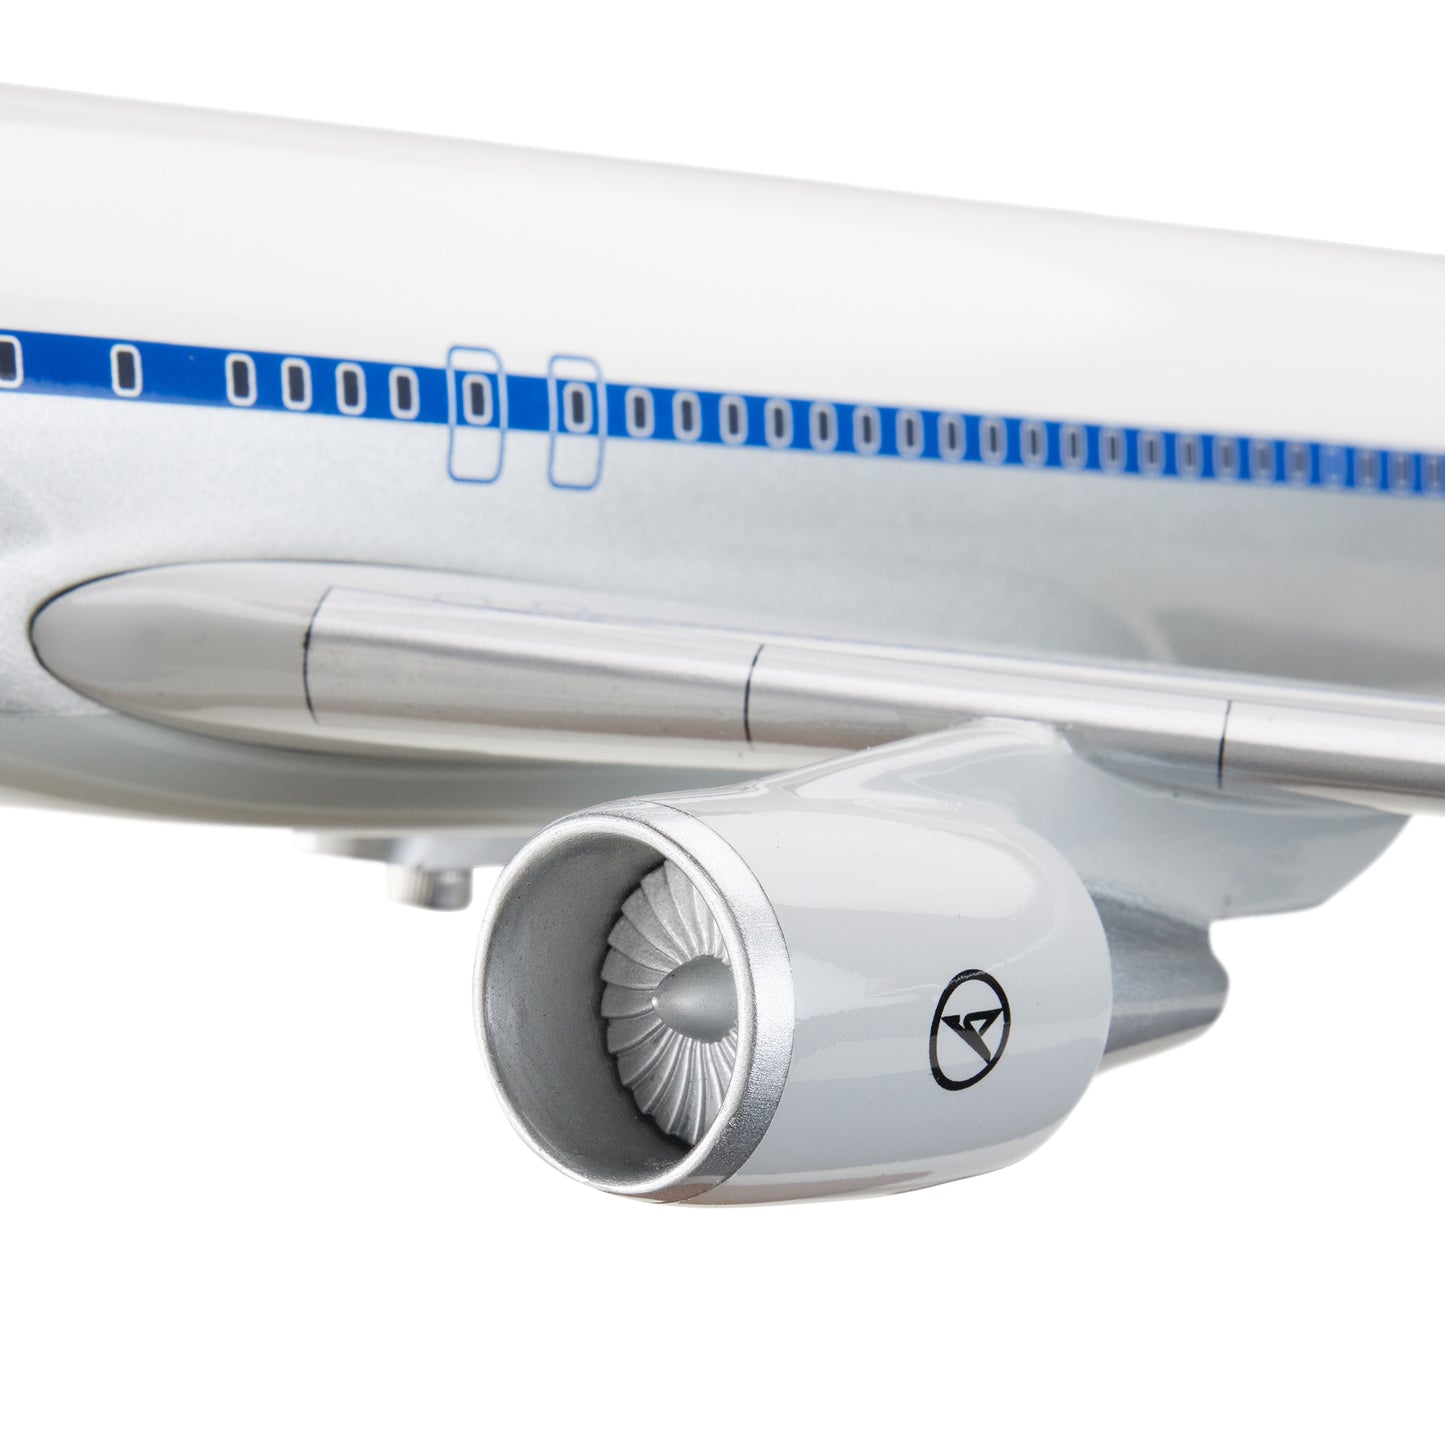 Modellflugzeug Boeing 767-300 "Achim" 1:100